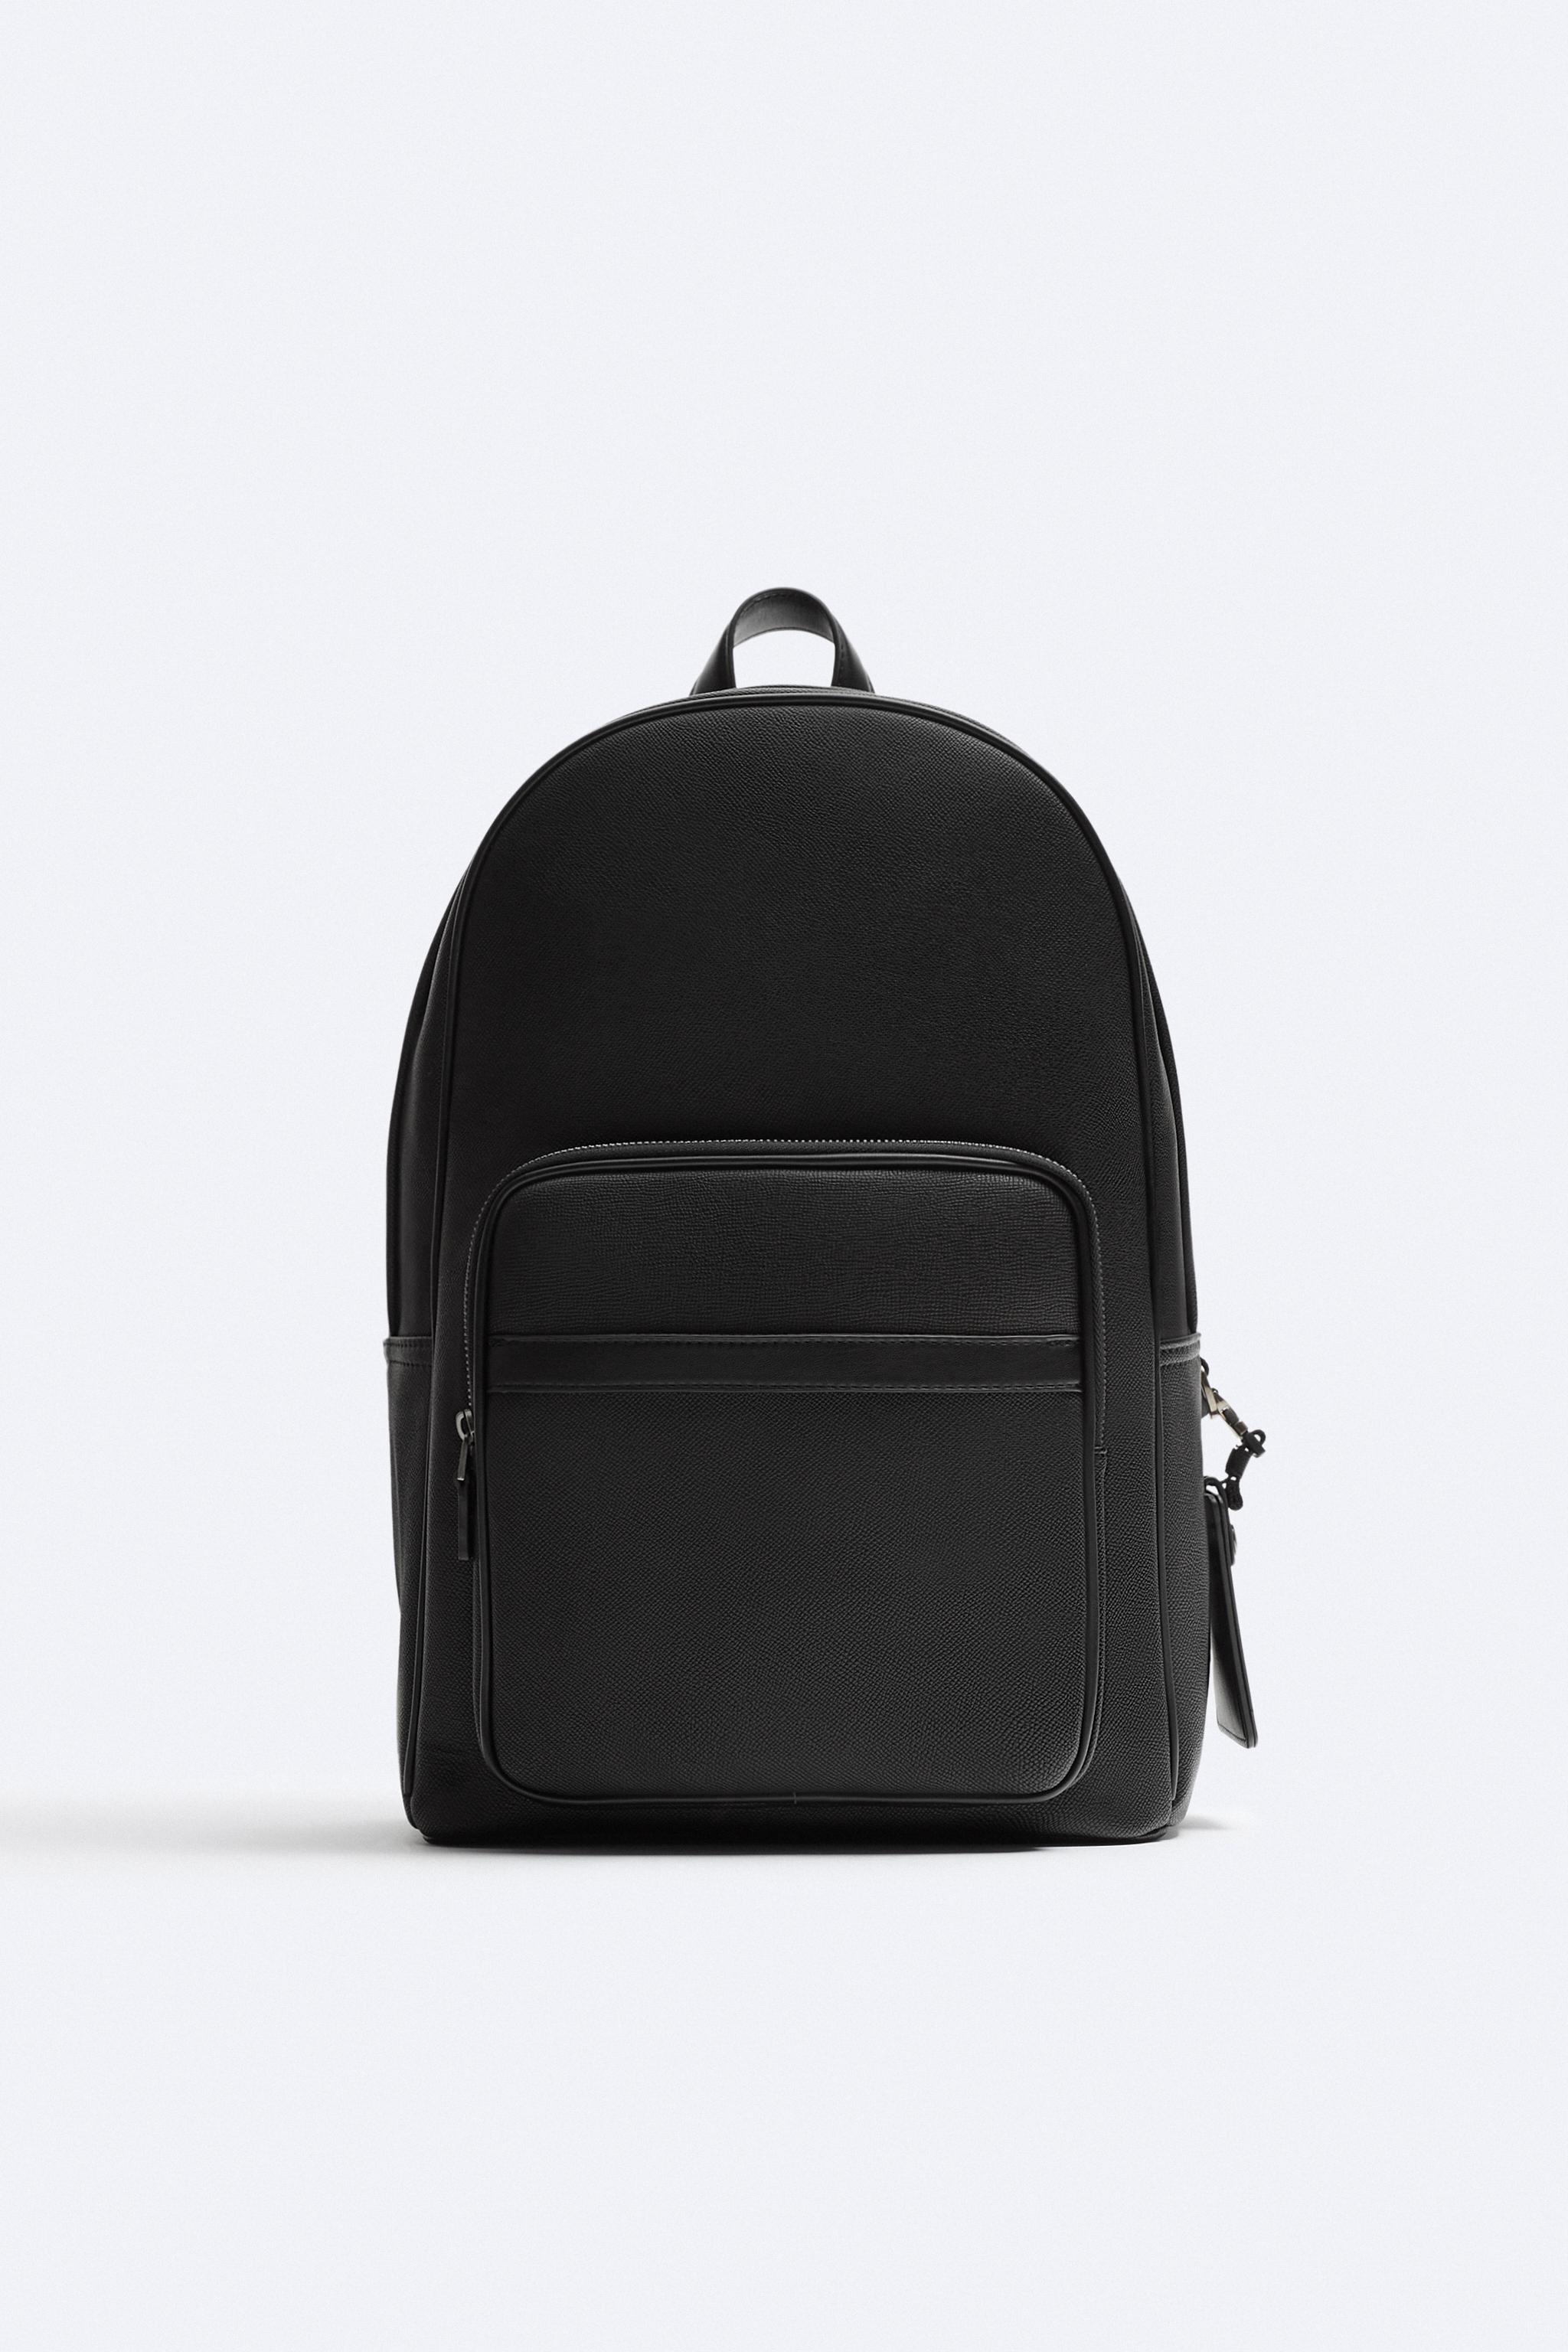 ZARAリュックサック ブラック ビジネスバック 入学入社の準備 - バッグ